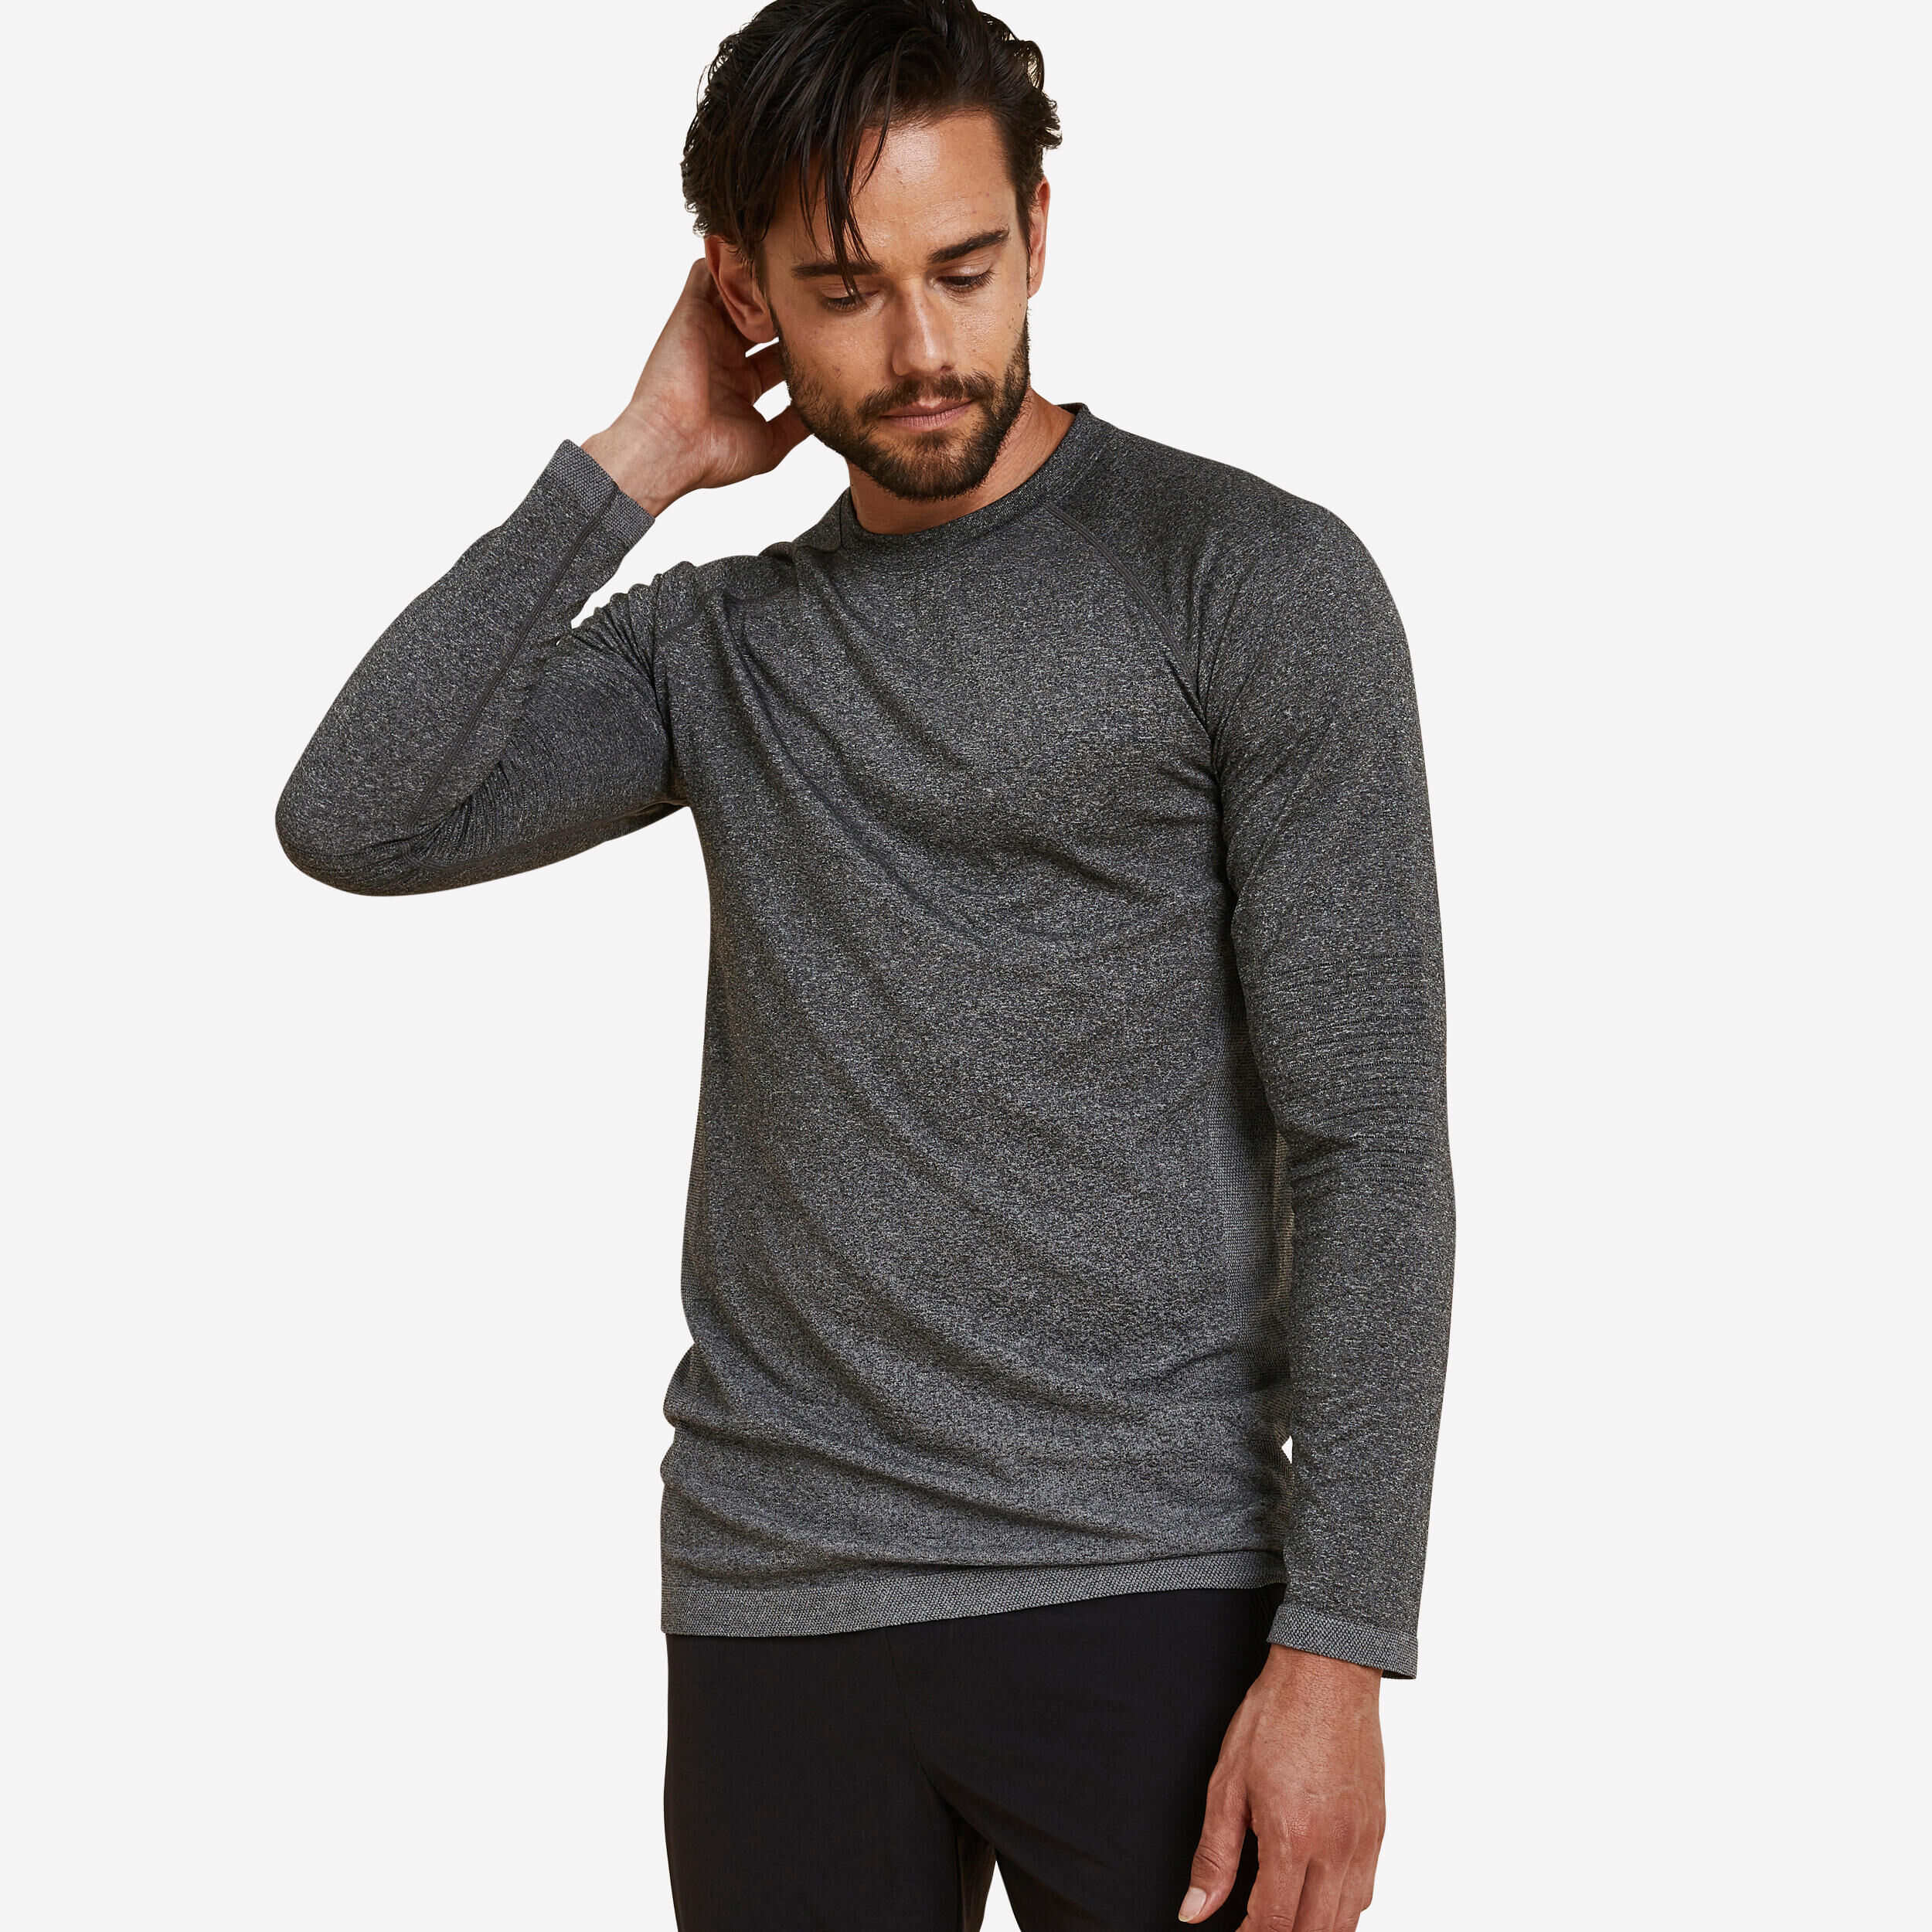 KIMJALY Men's Long-Sleeved Seamless T-Shirt - Grey